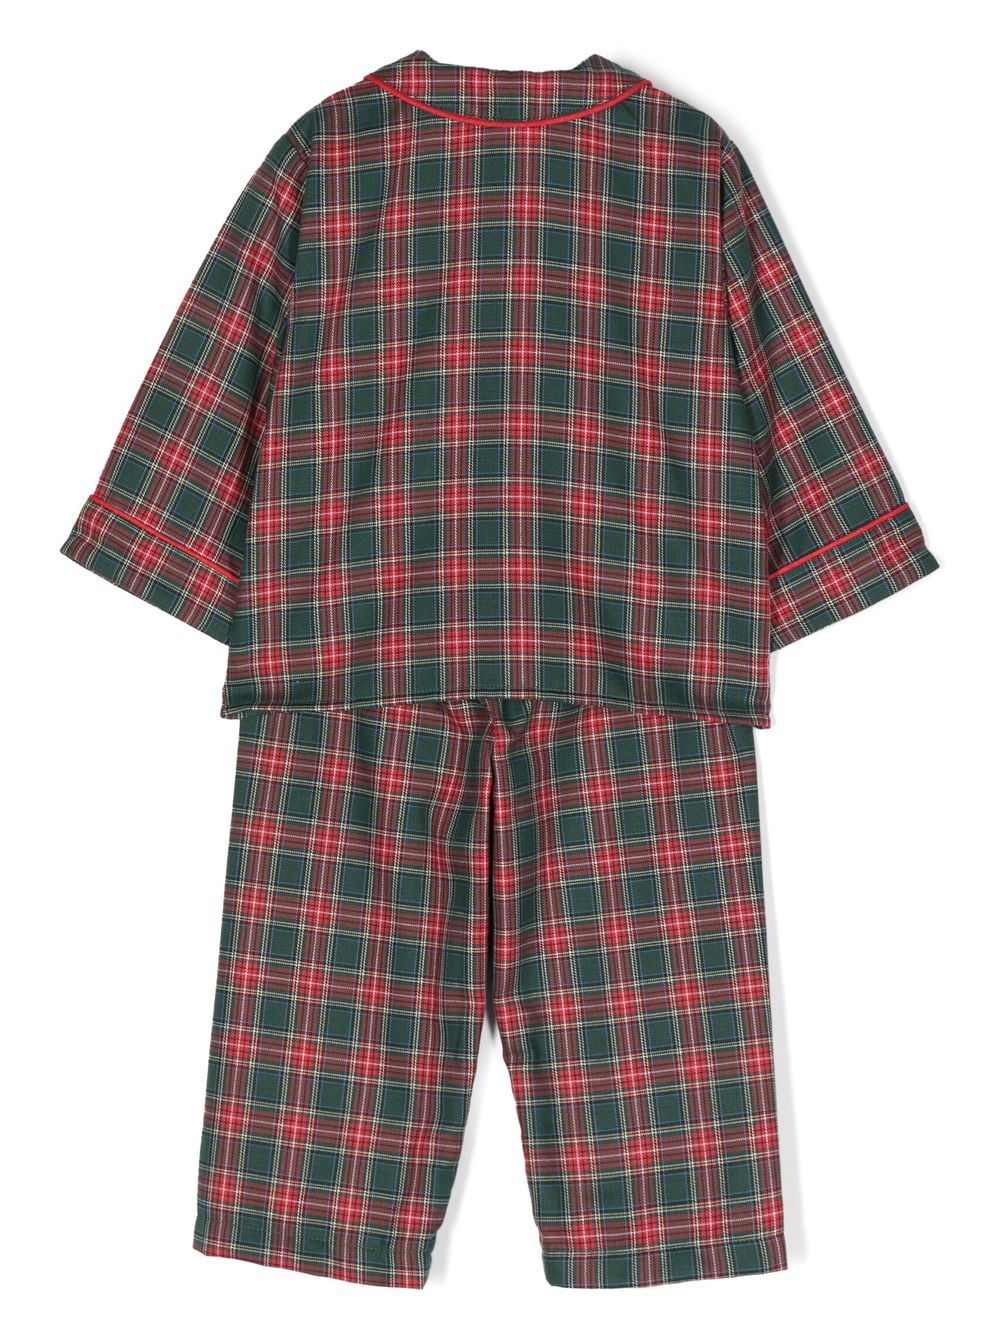 mariella ferrari plaid-check pyjamas - red